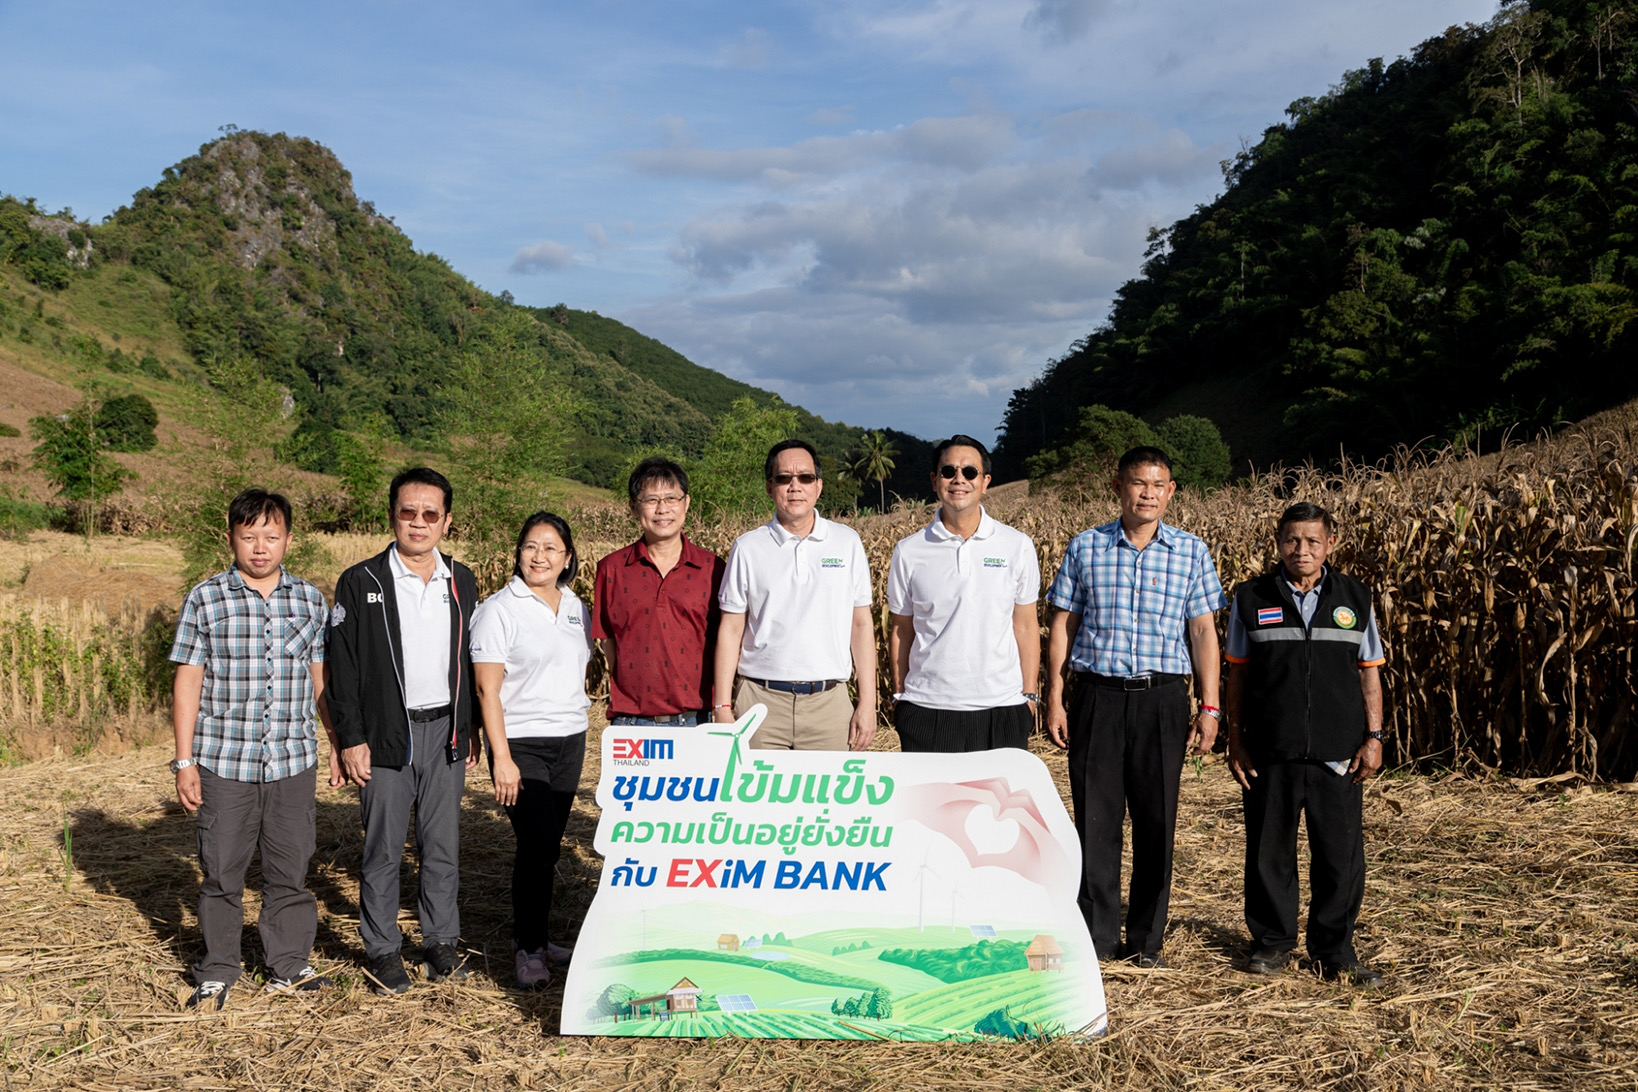 EXIM BANK จับมือพันธมิตรนำโมเดล Green Development ลงพื้นที่แก้ภัยแล้ง จ.น่าน